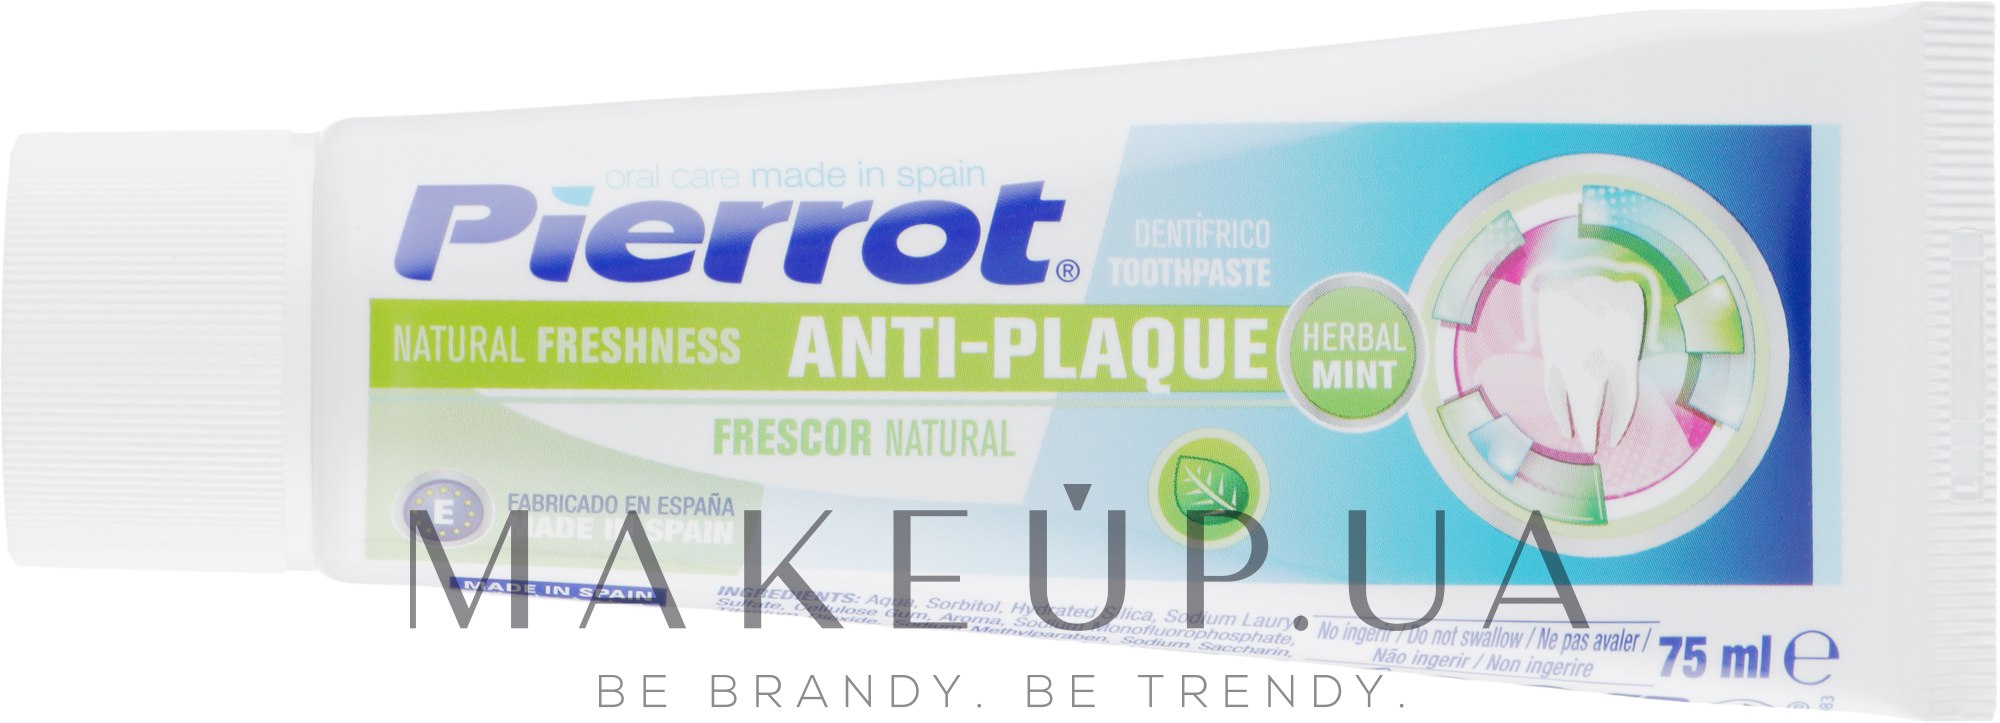 Зубная паста "Мята и Фтор" - Pierrot Natural Freshness Toothpaste  — фото 75ml